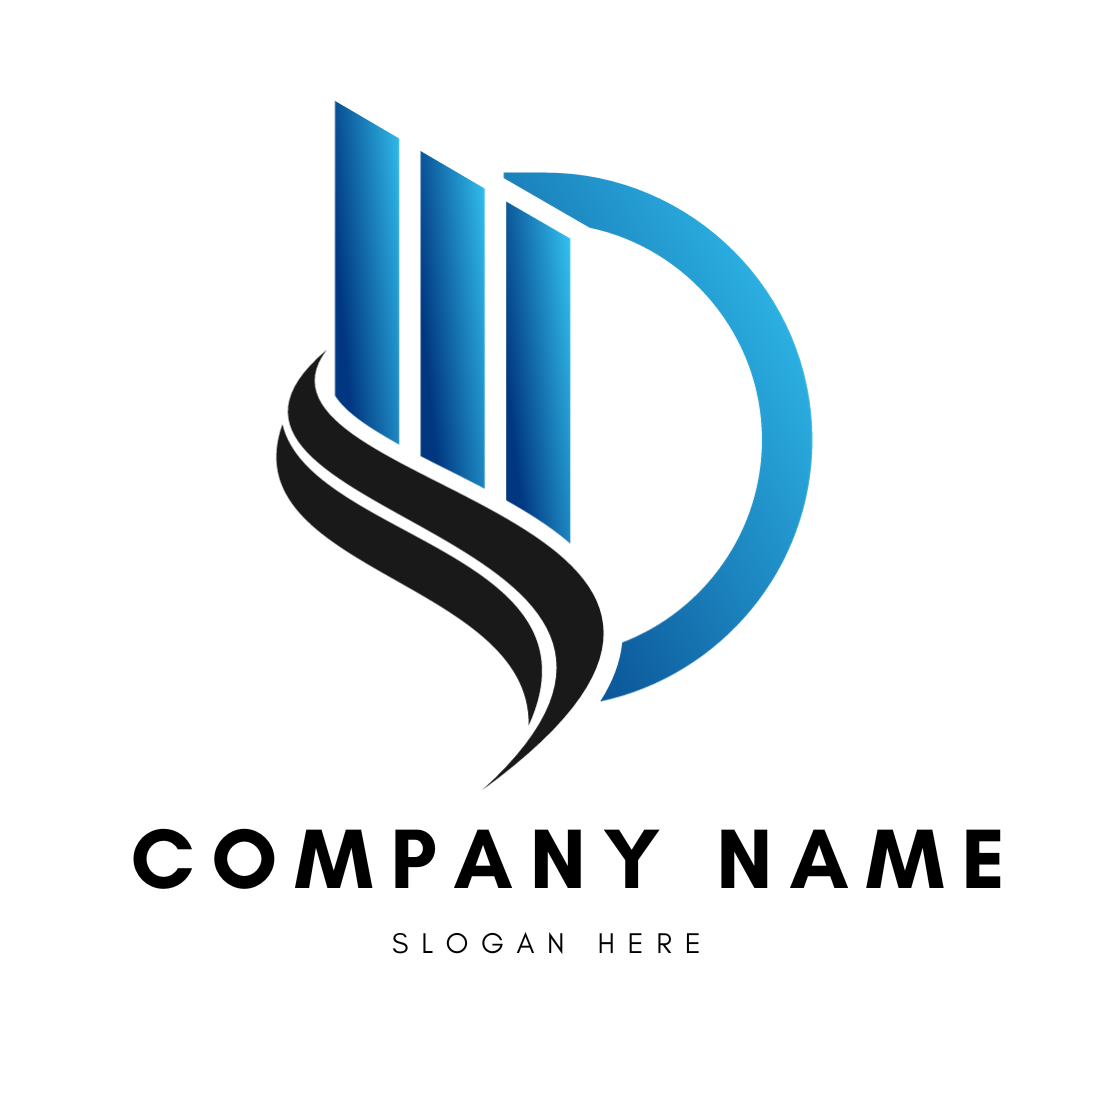 company name 2 665